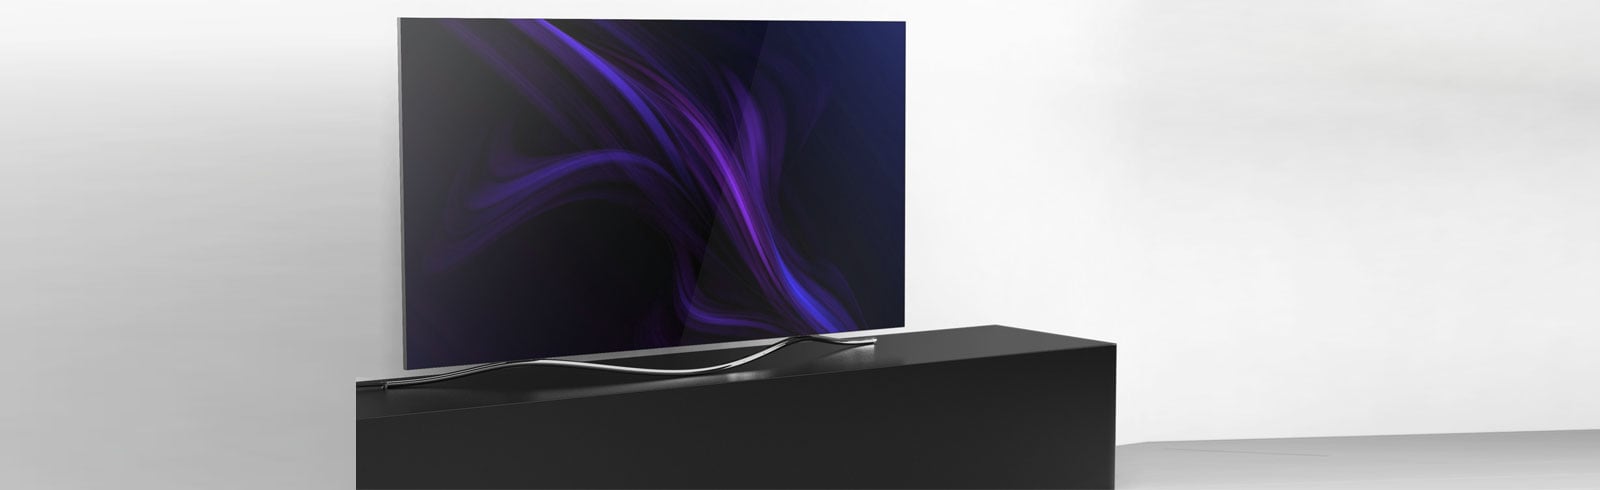 TCL Surface TV.jpg